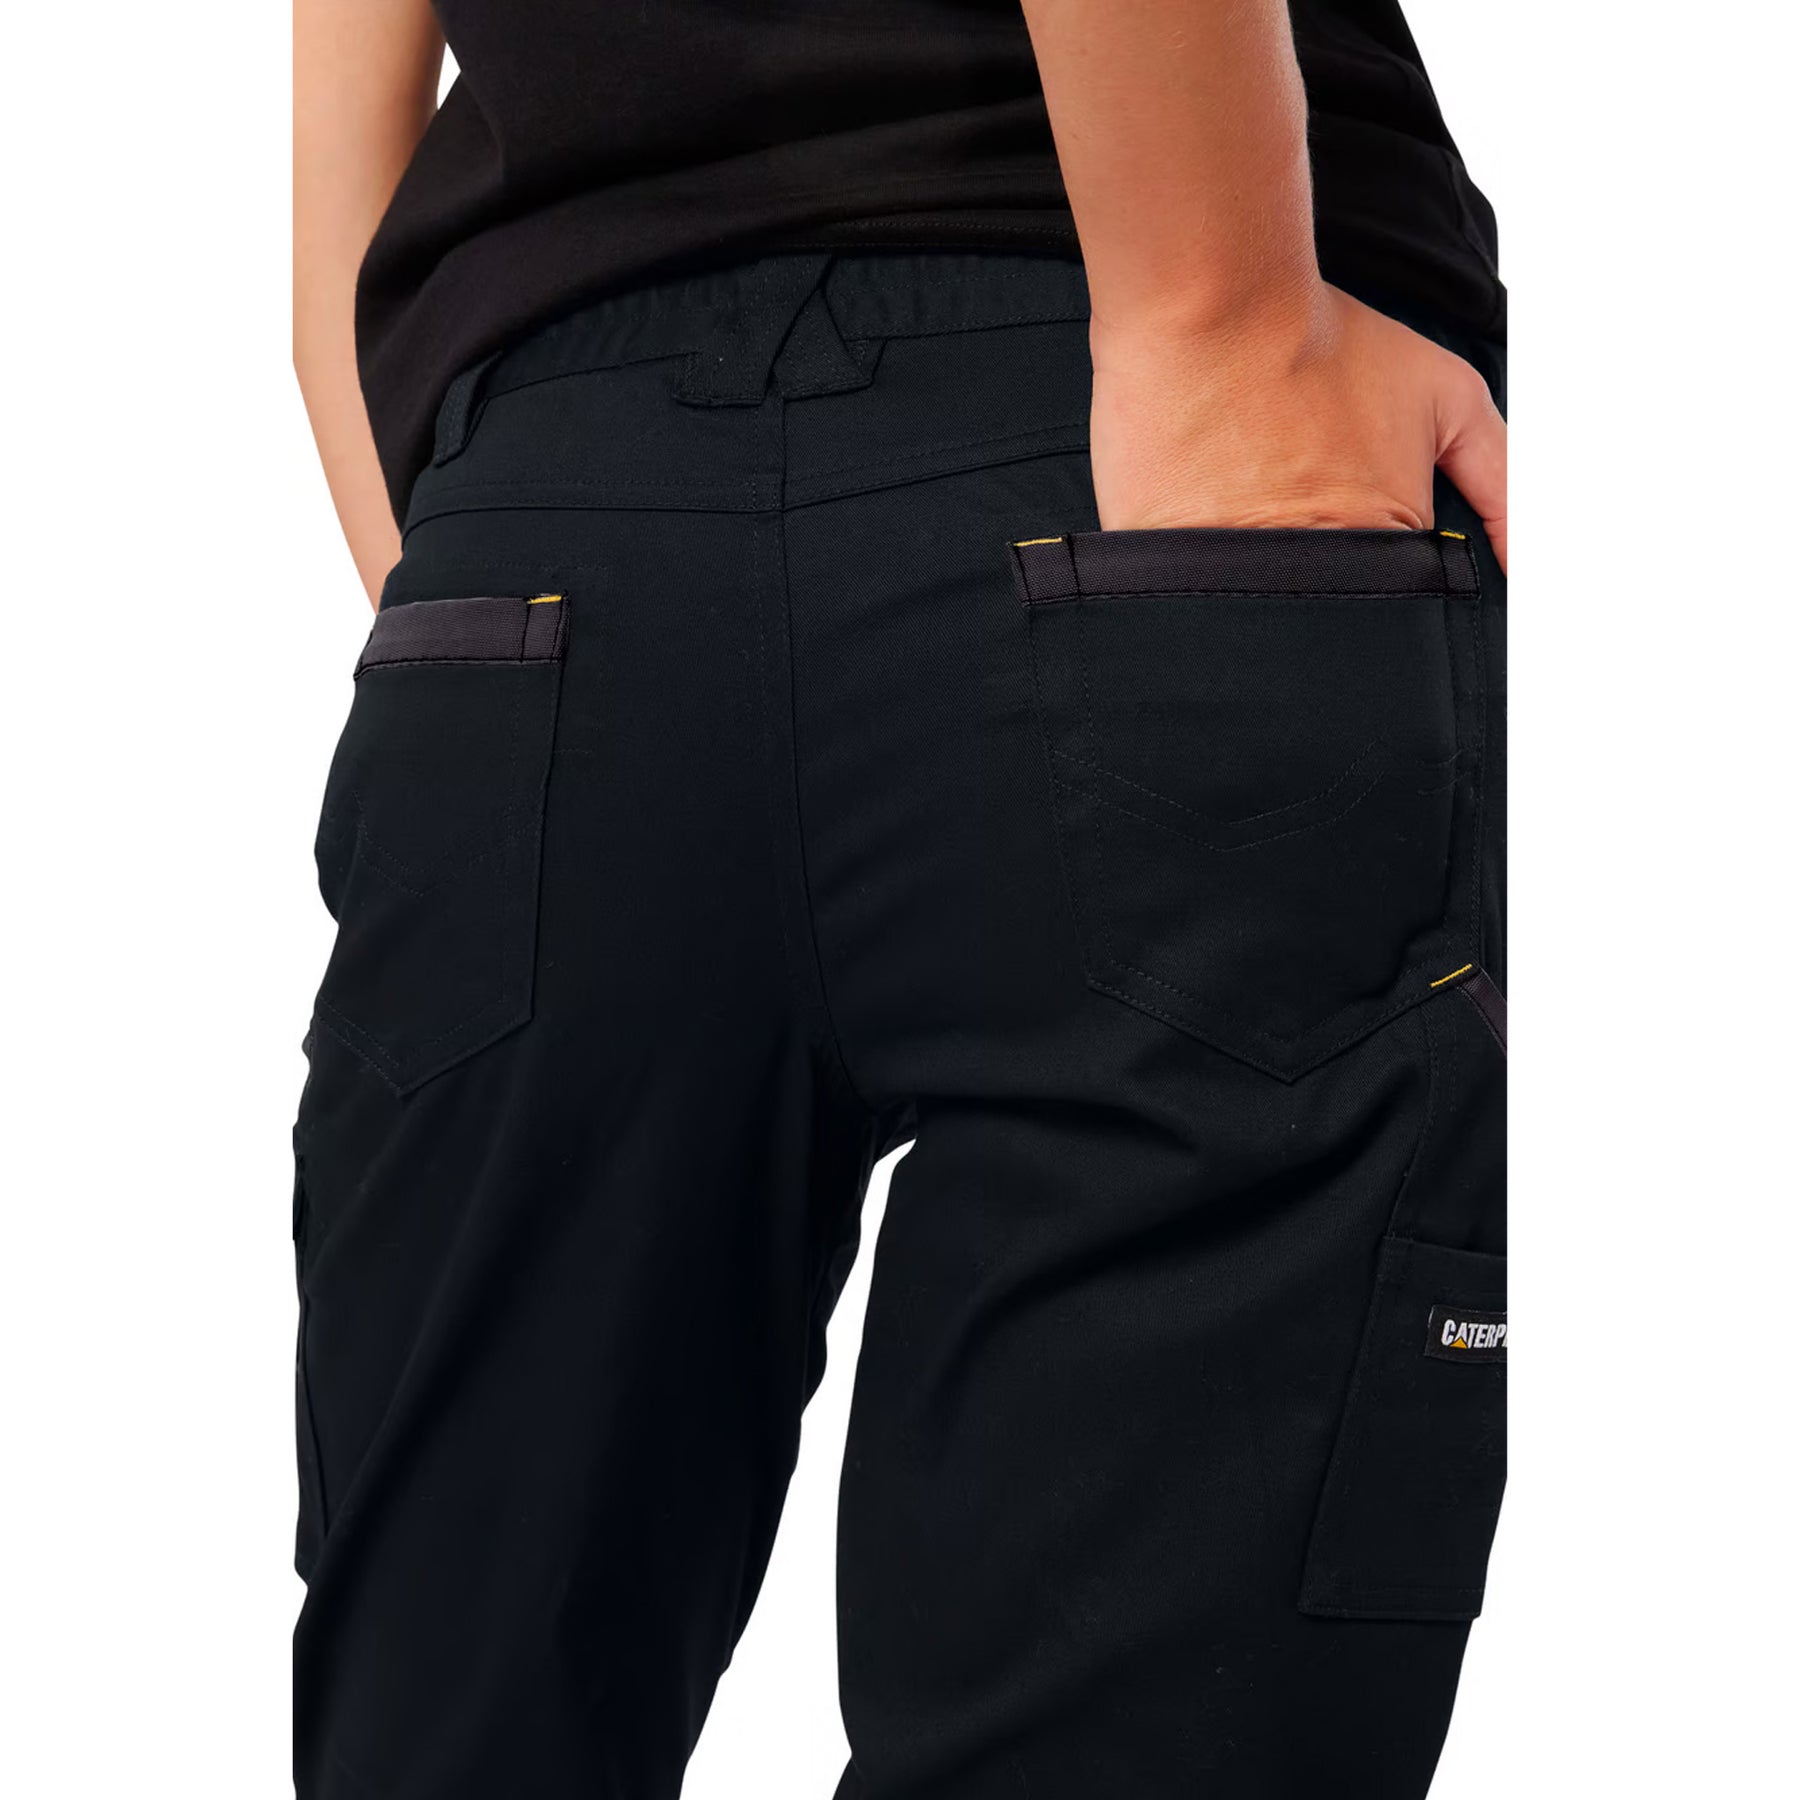 cat workwear womens cuffed dynamic pants in black